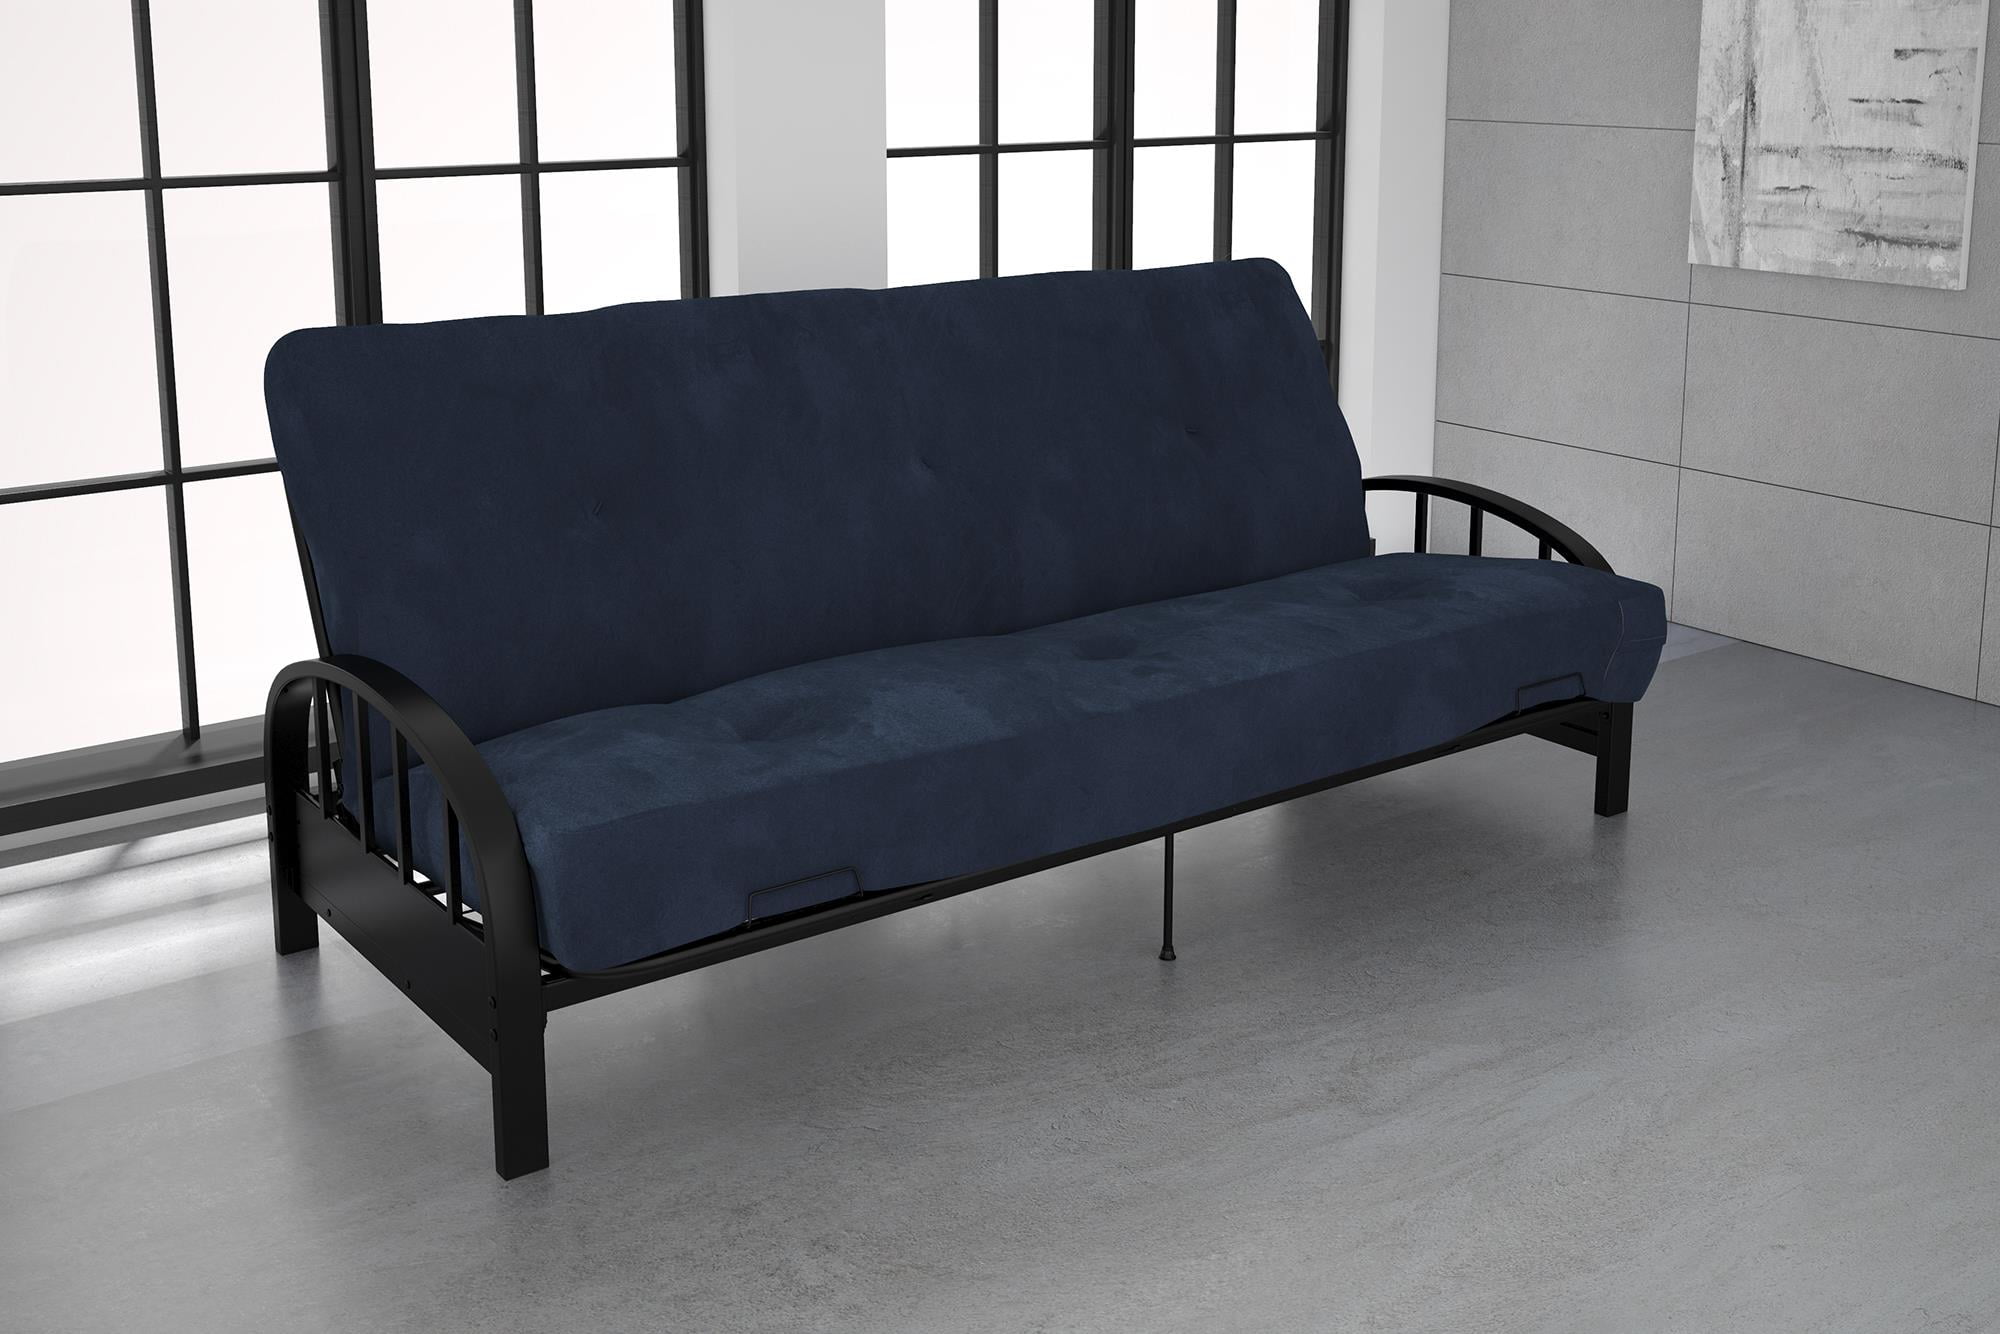 black full size futon mattress cover free shipping